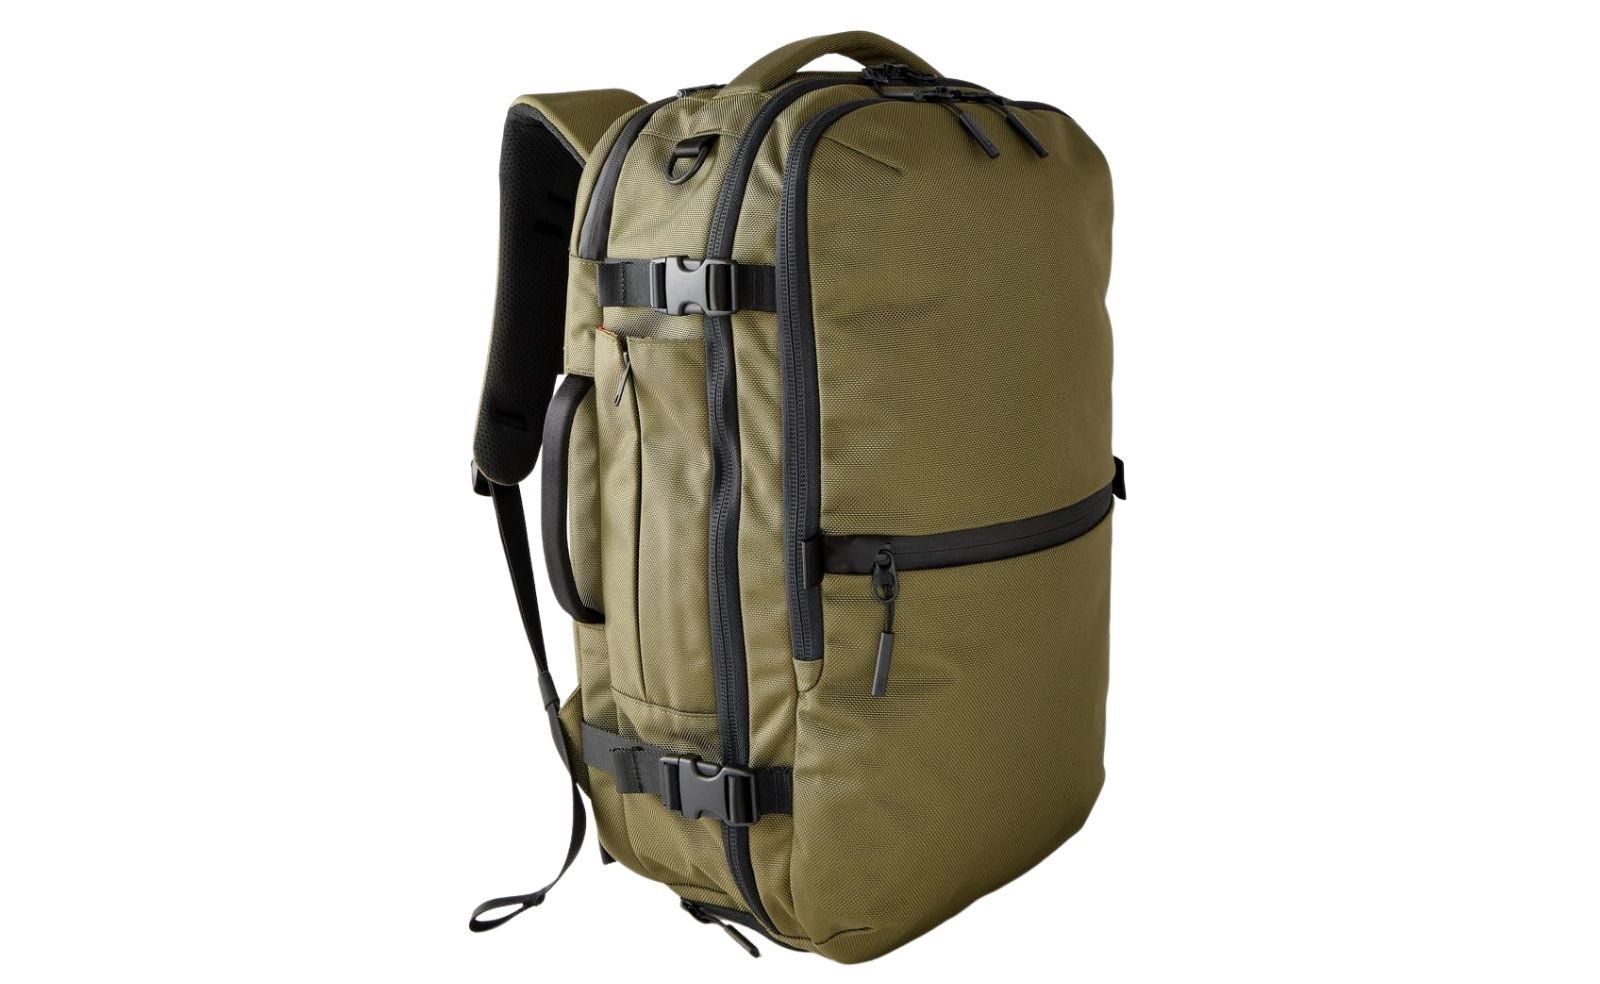 Everyday Carry Essentials: Aer Travel Pack 2, Peak Design Mobile Wallet